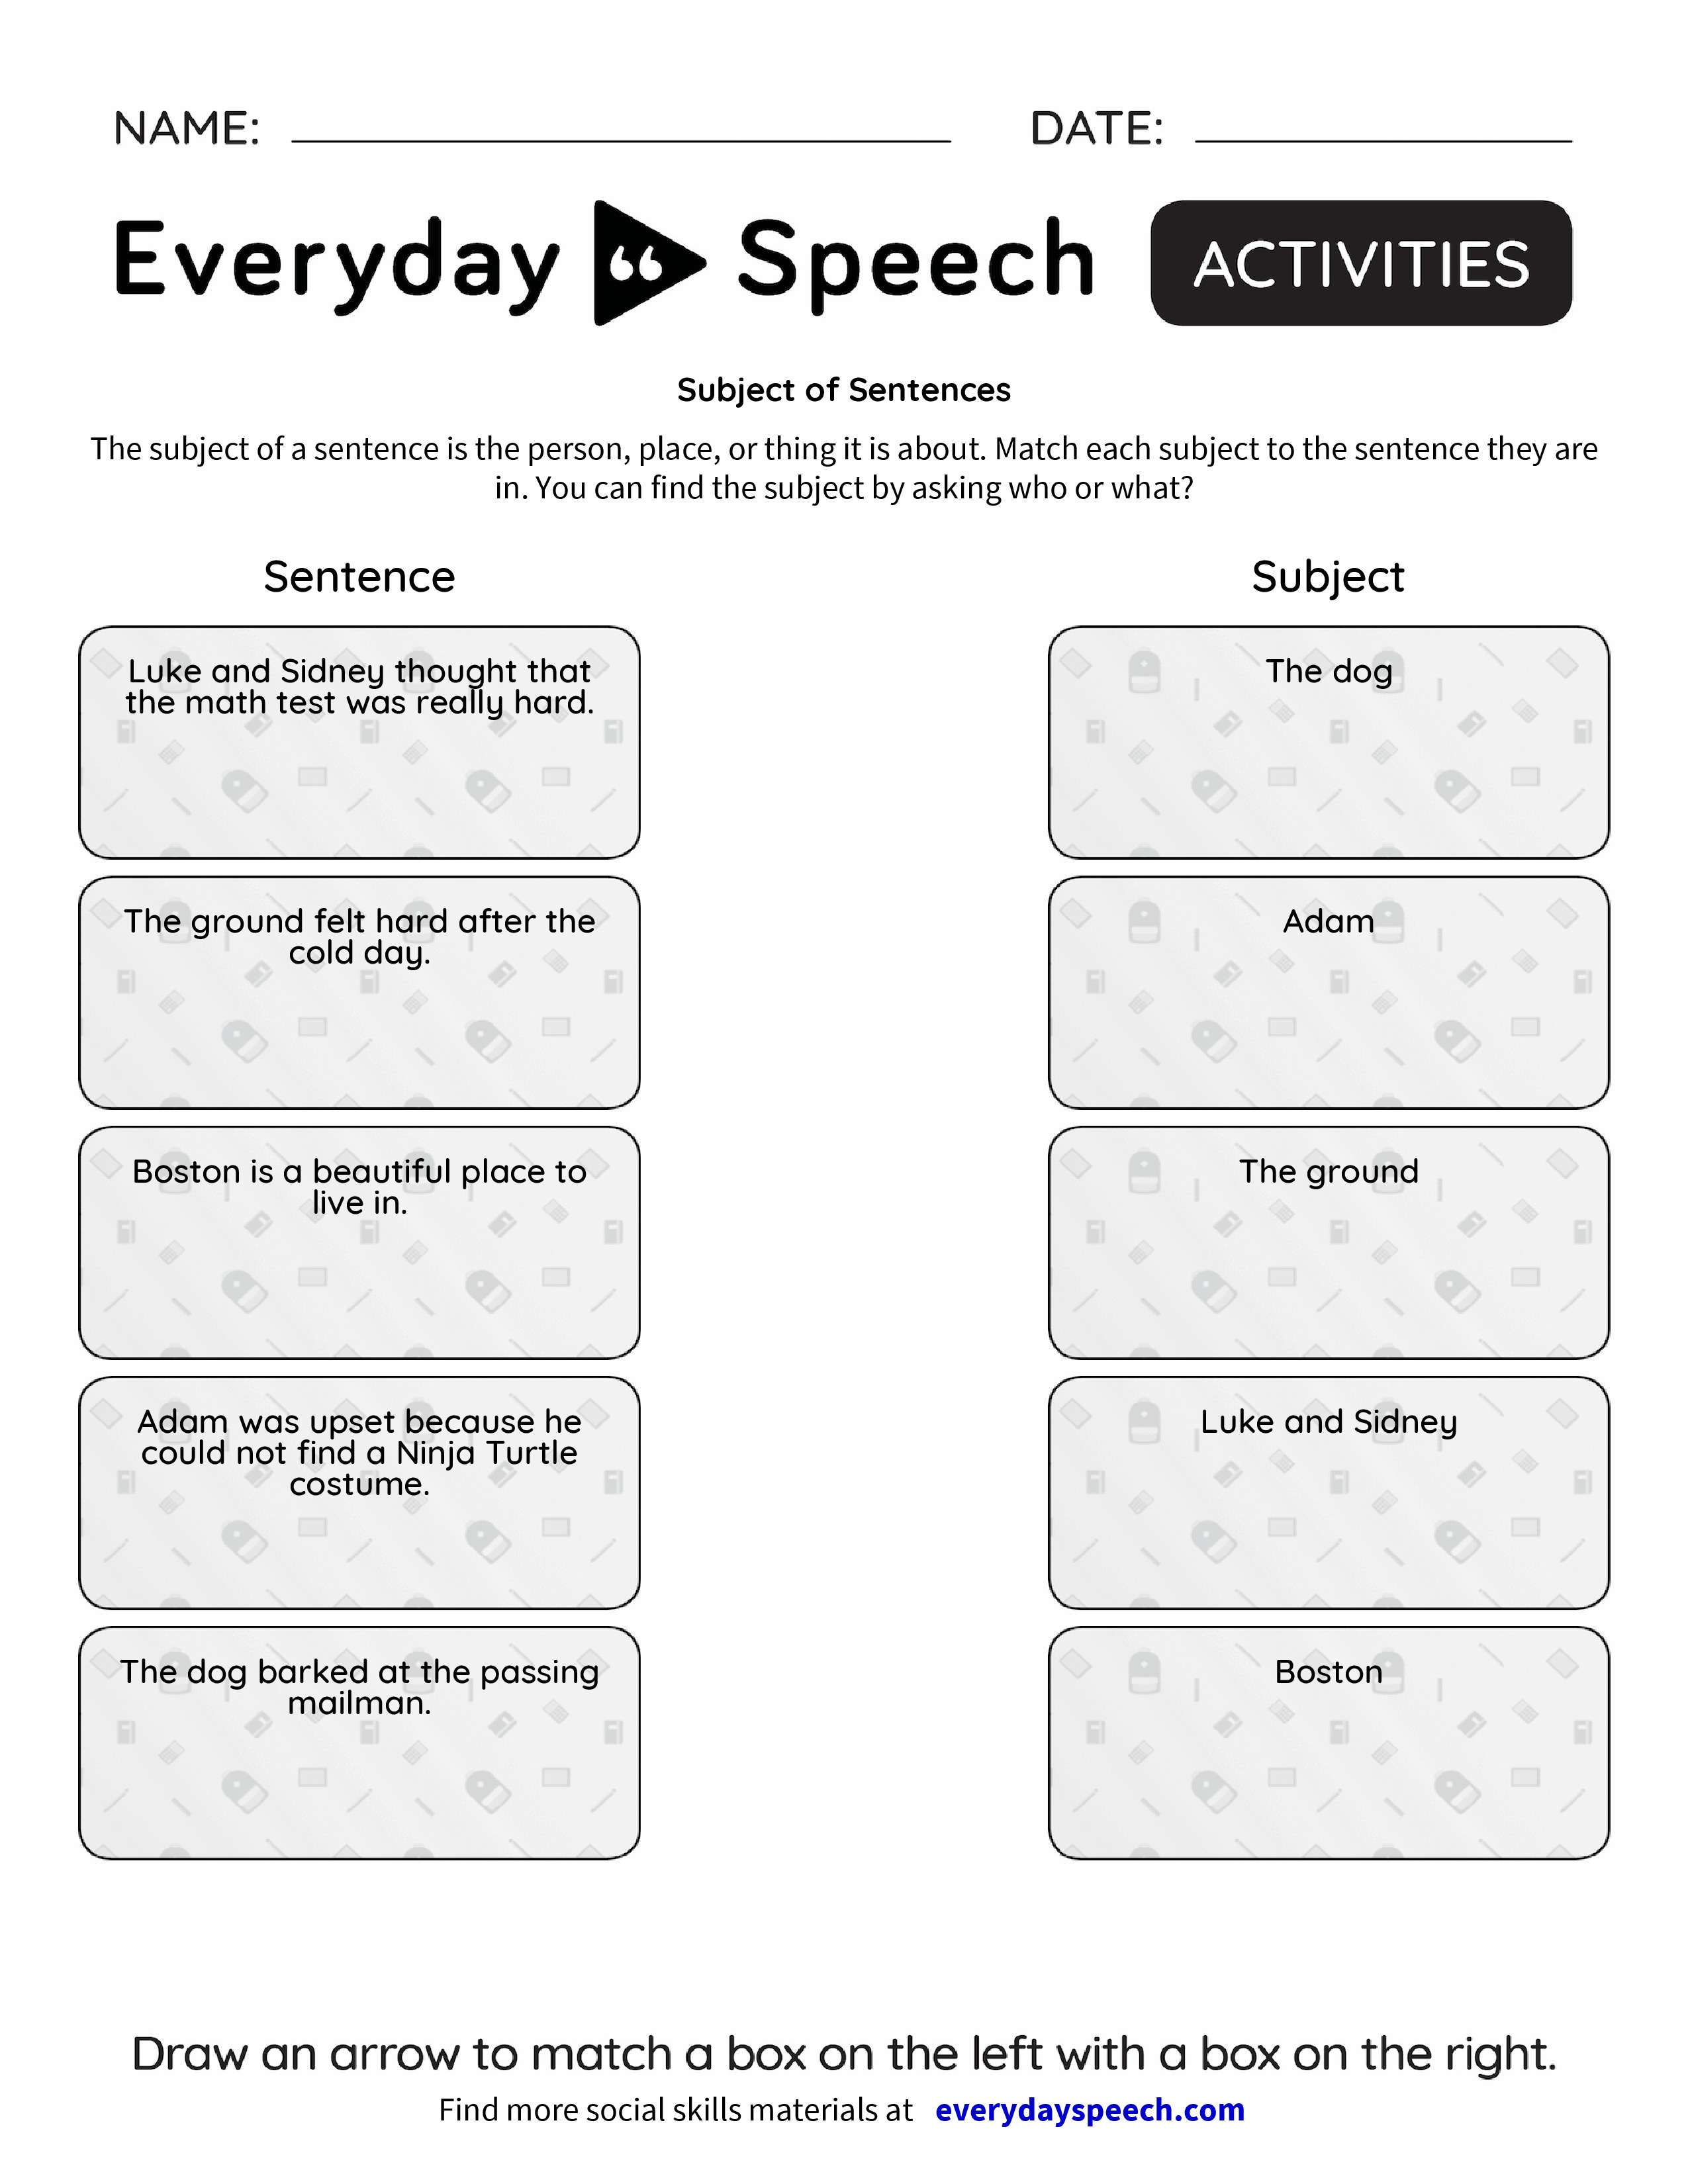 Subject Of Sentences Everyday Speech Everyday Speech